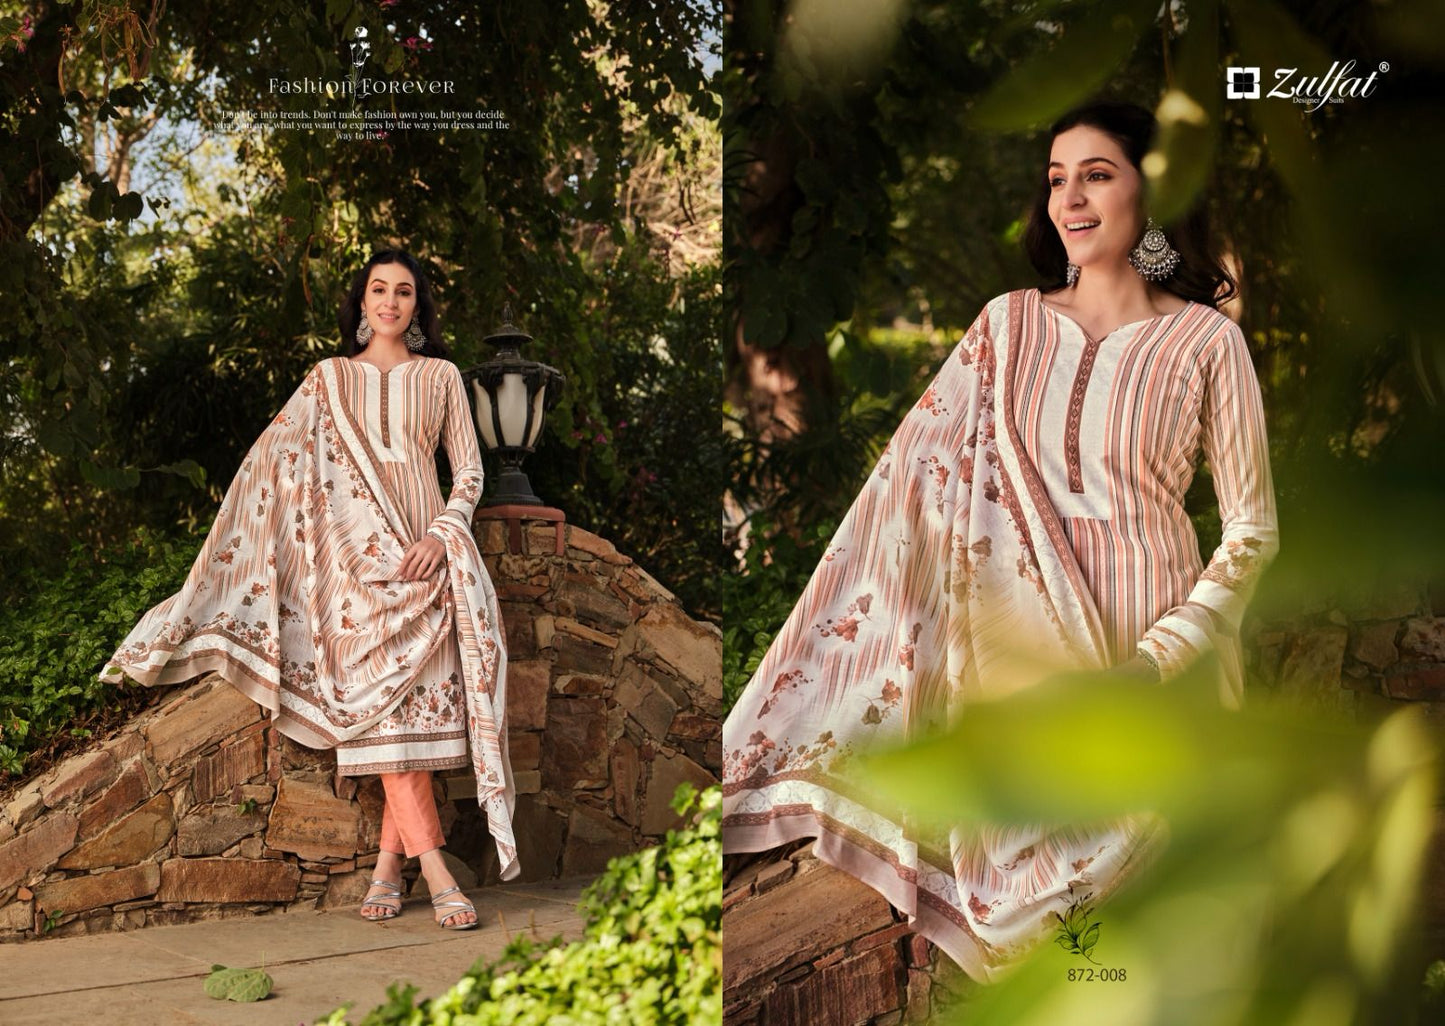 Kashish Zulfat Designer Cotton Karachi Salwar Suits